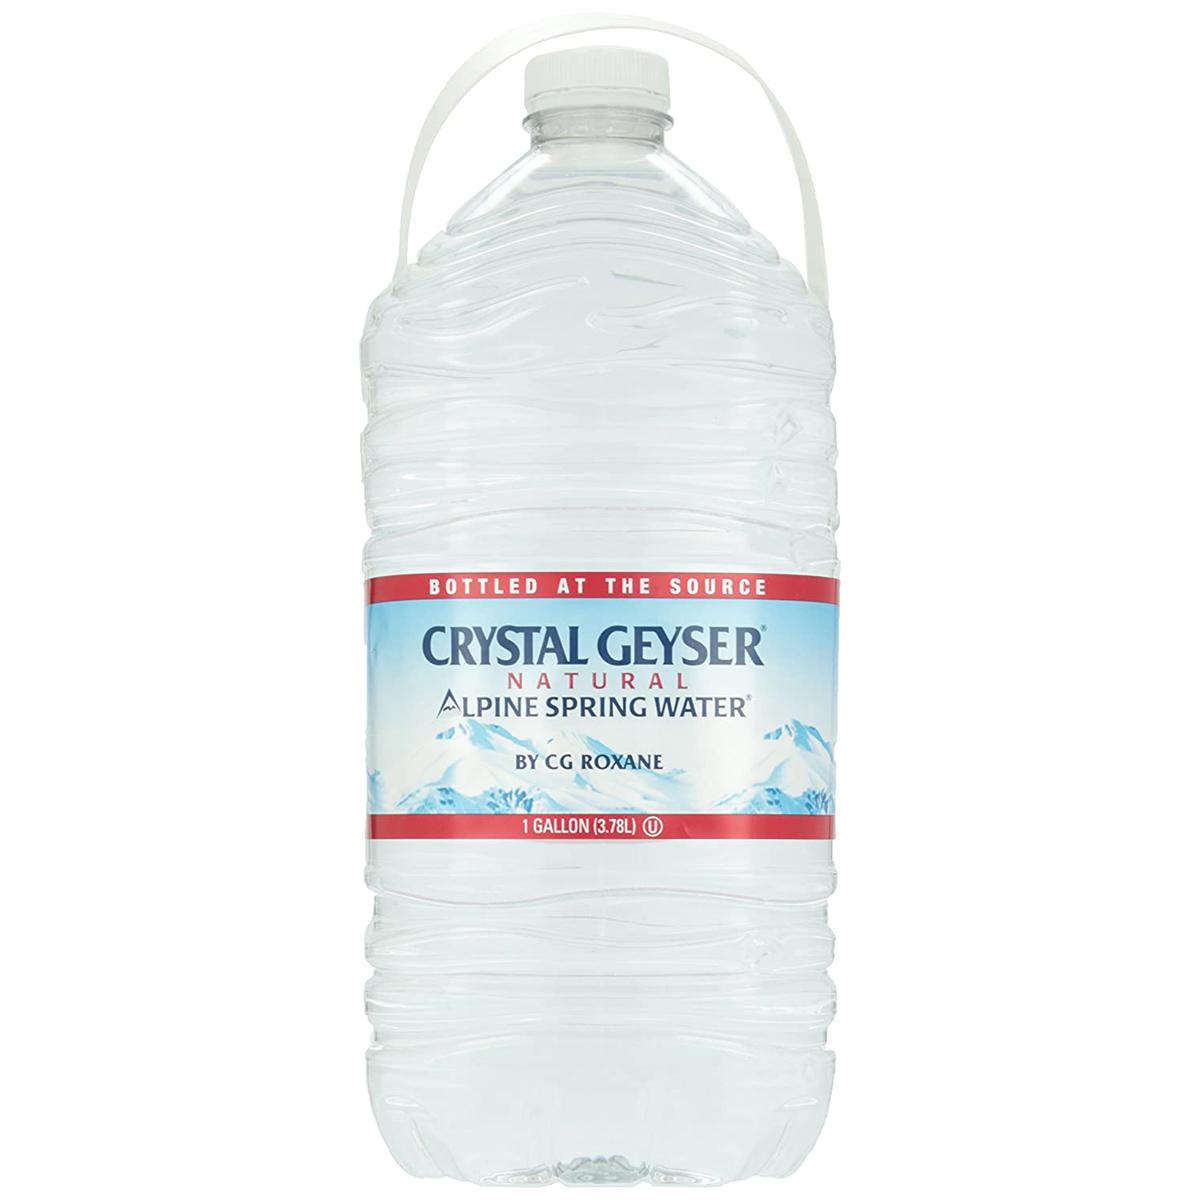 1-Gallon Crystal Geyser Alpine Spring Water for $0.98